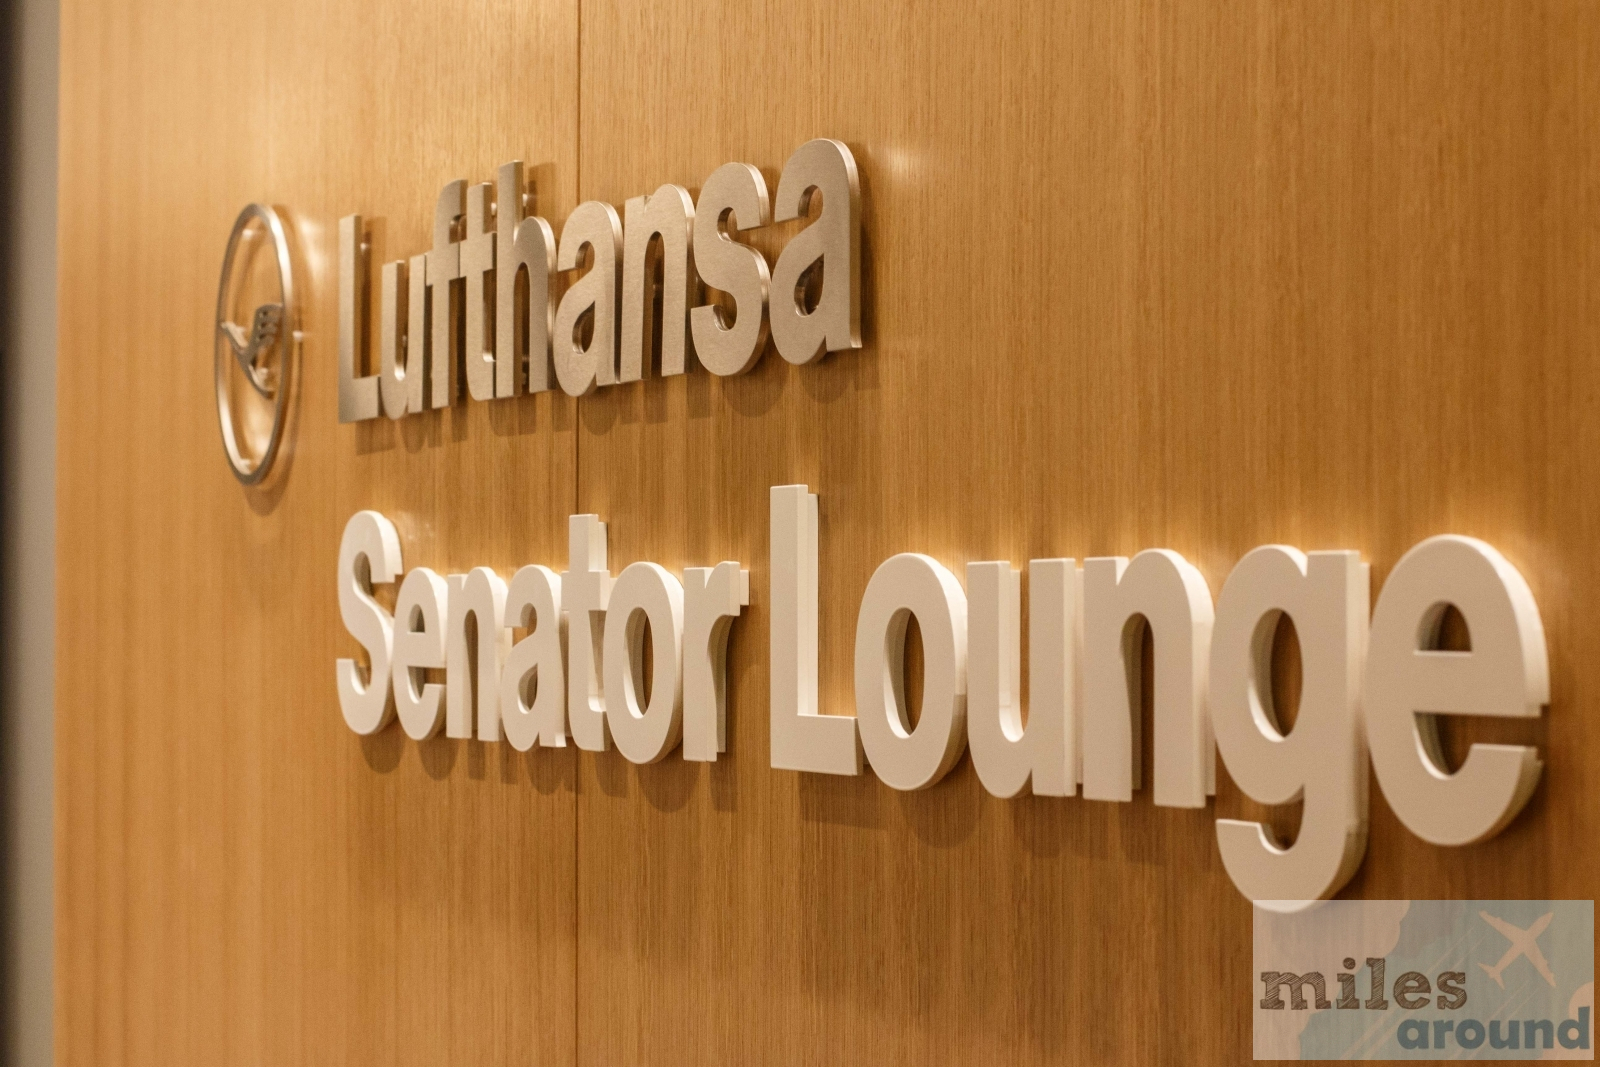 Lufthansa Senator Lounge